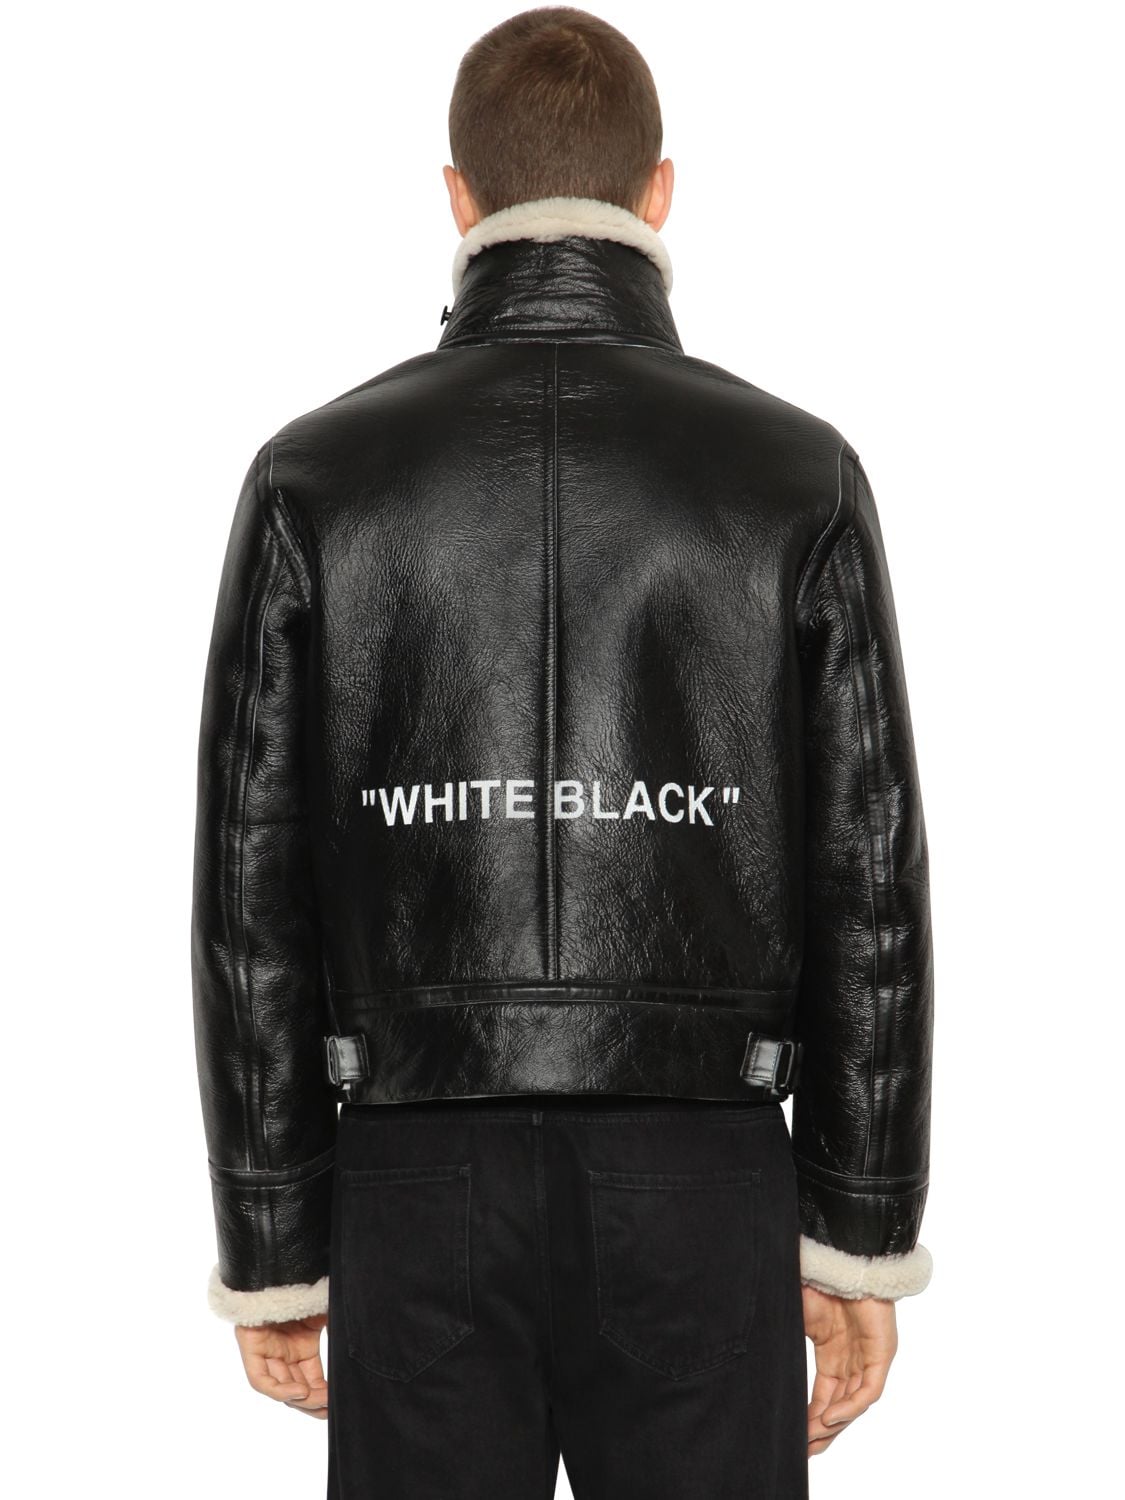 OFF-WHITE "WHITE BLACK" SHEARLING JACKET,68ILFA005-MTAwMQ2